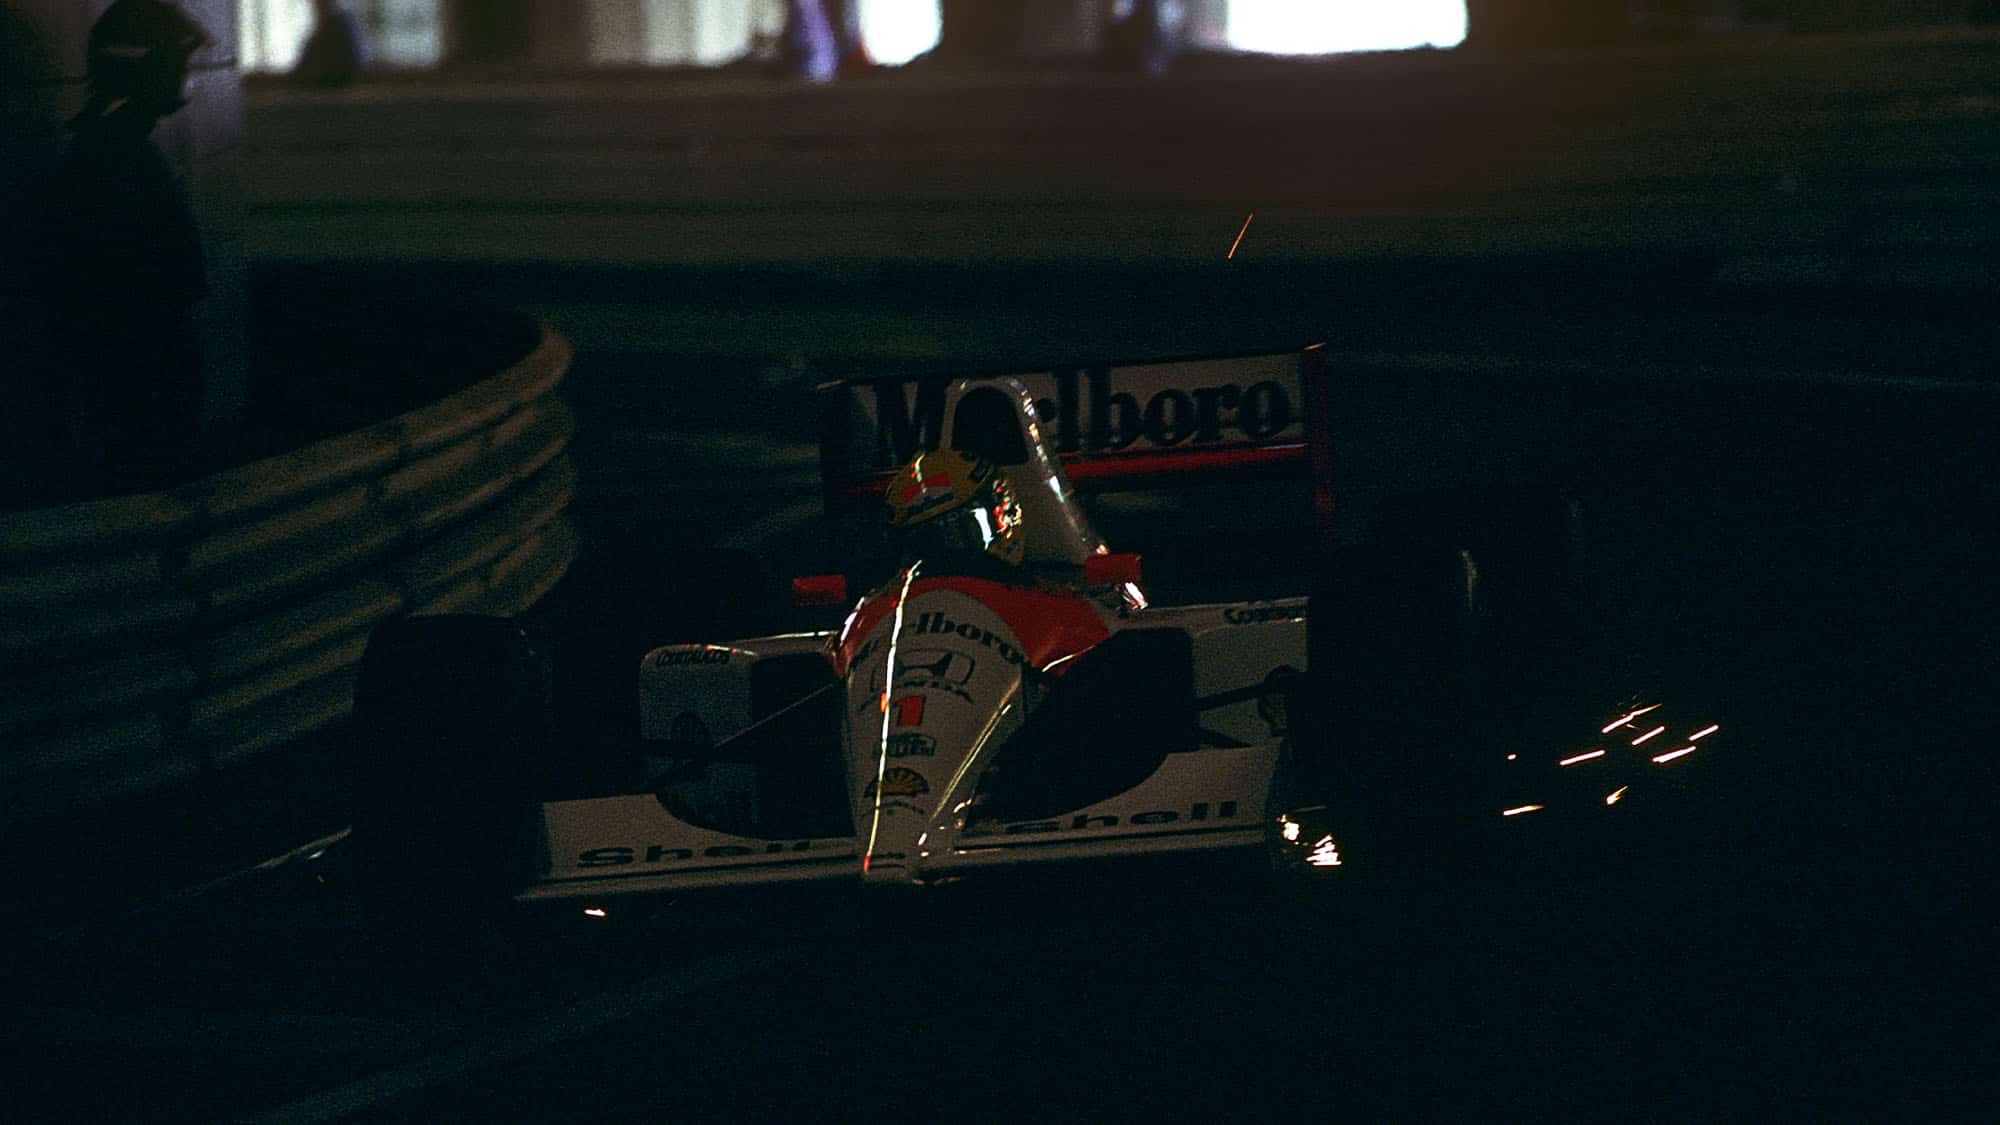 Ayrton Senna, McLaren-Honda MP4/6, Grand Prix of Monaco, Monaco, 12 May 1991. (Photo by Paul-Henri Cahier/Getty Images)